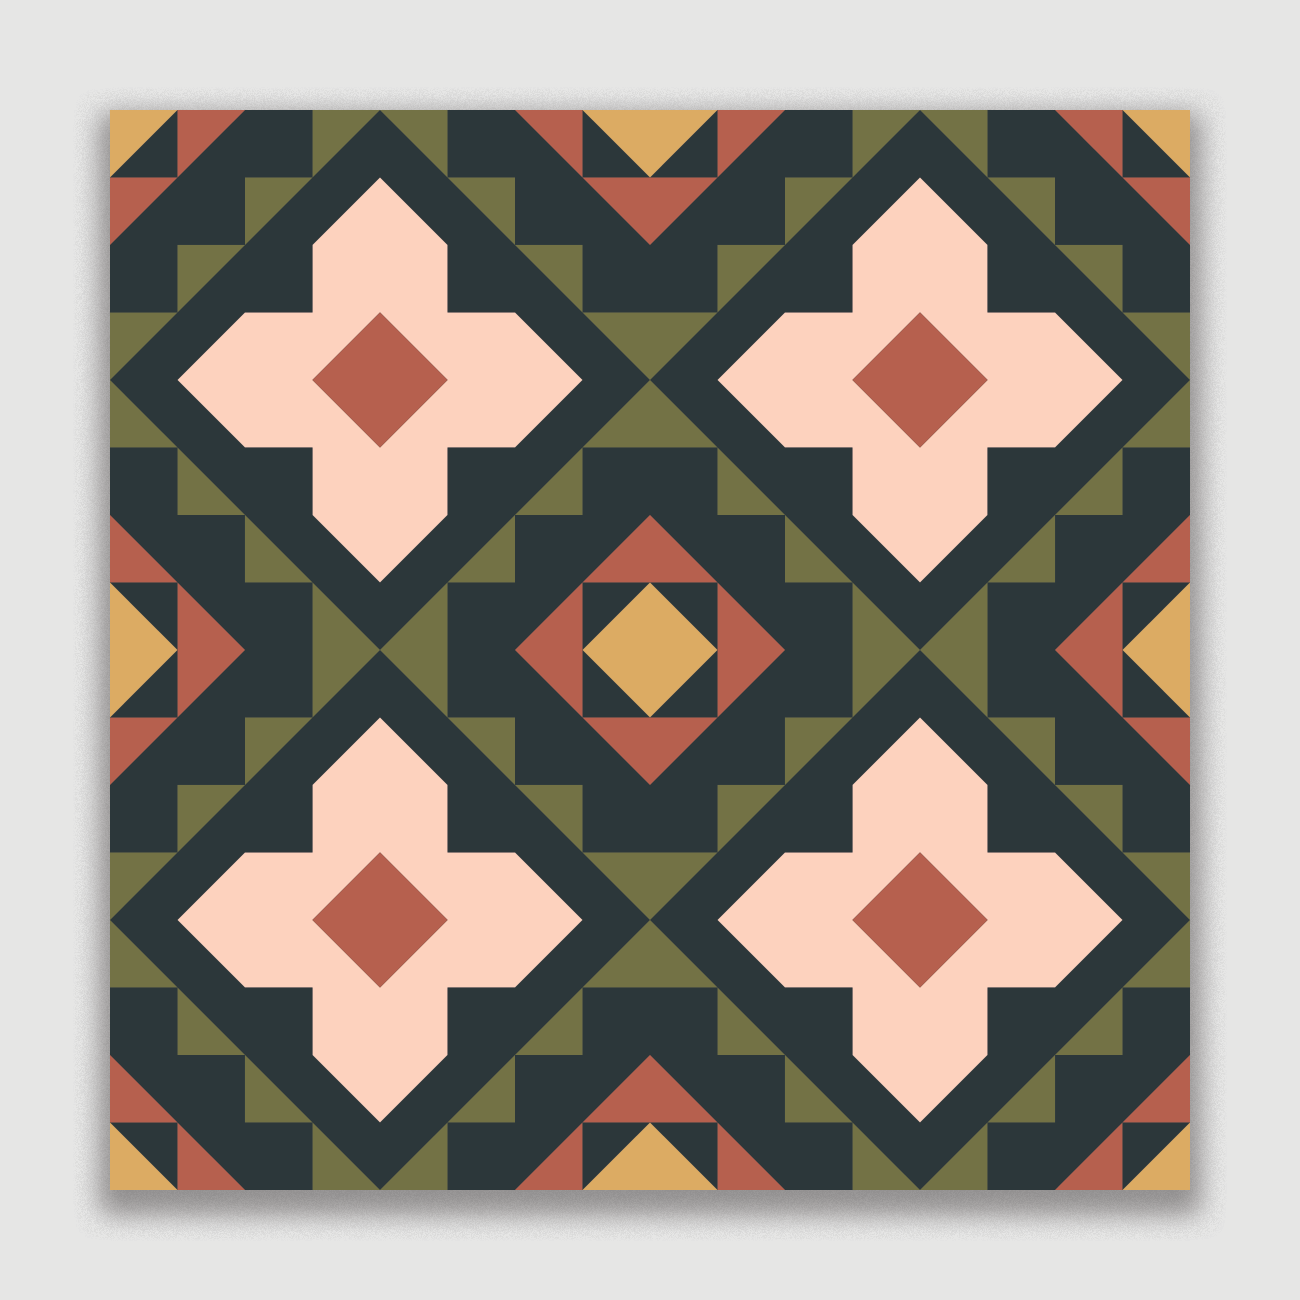 Spruce Woods Paper Pattern